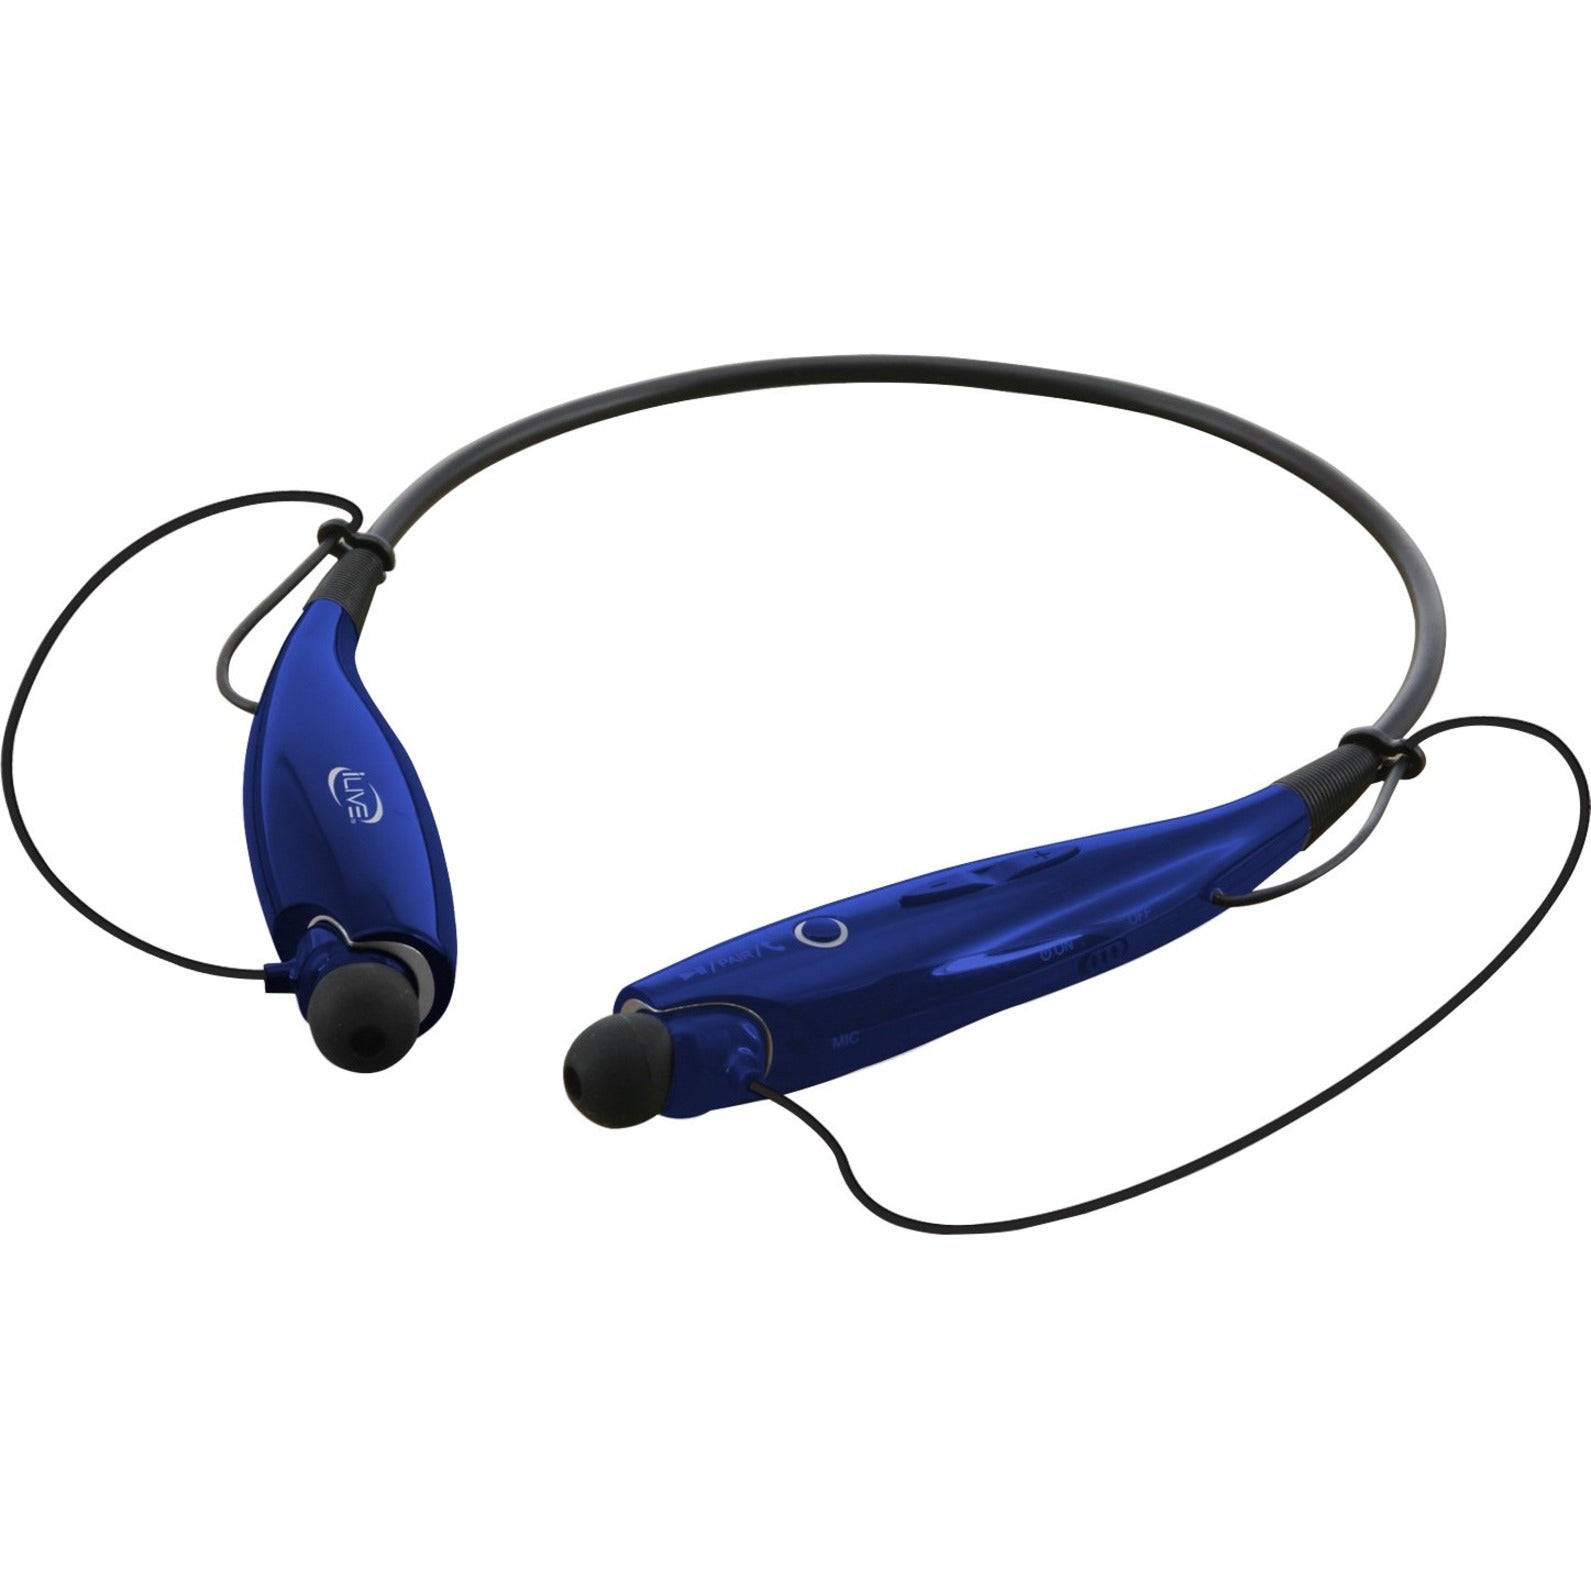 iLive IAEB25BU Wireless Stereo Headset, Behind-the-neck Earbud, Blue, 90 Day Warranty